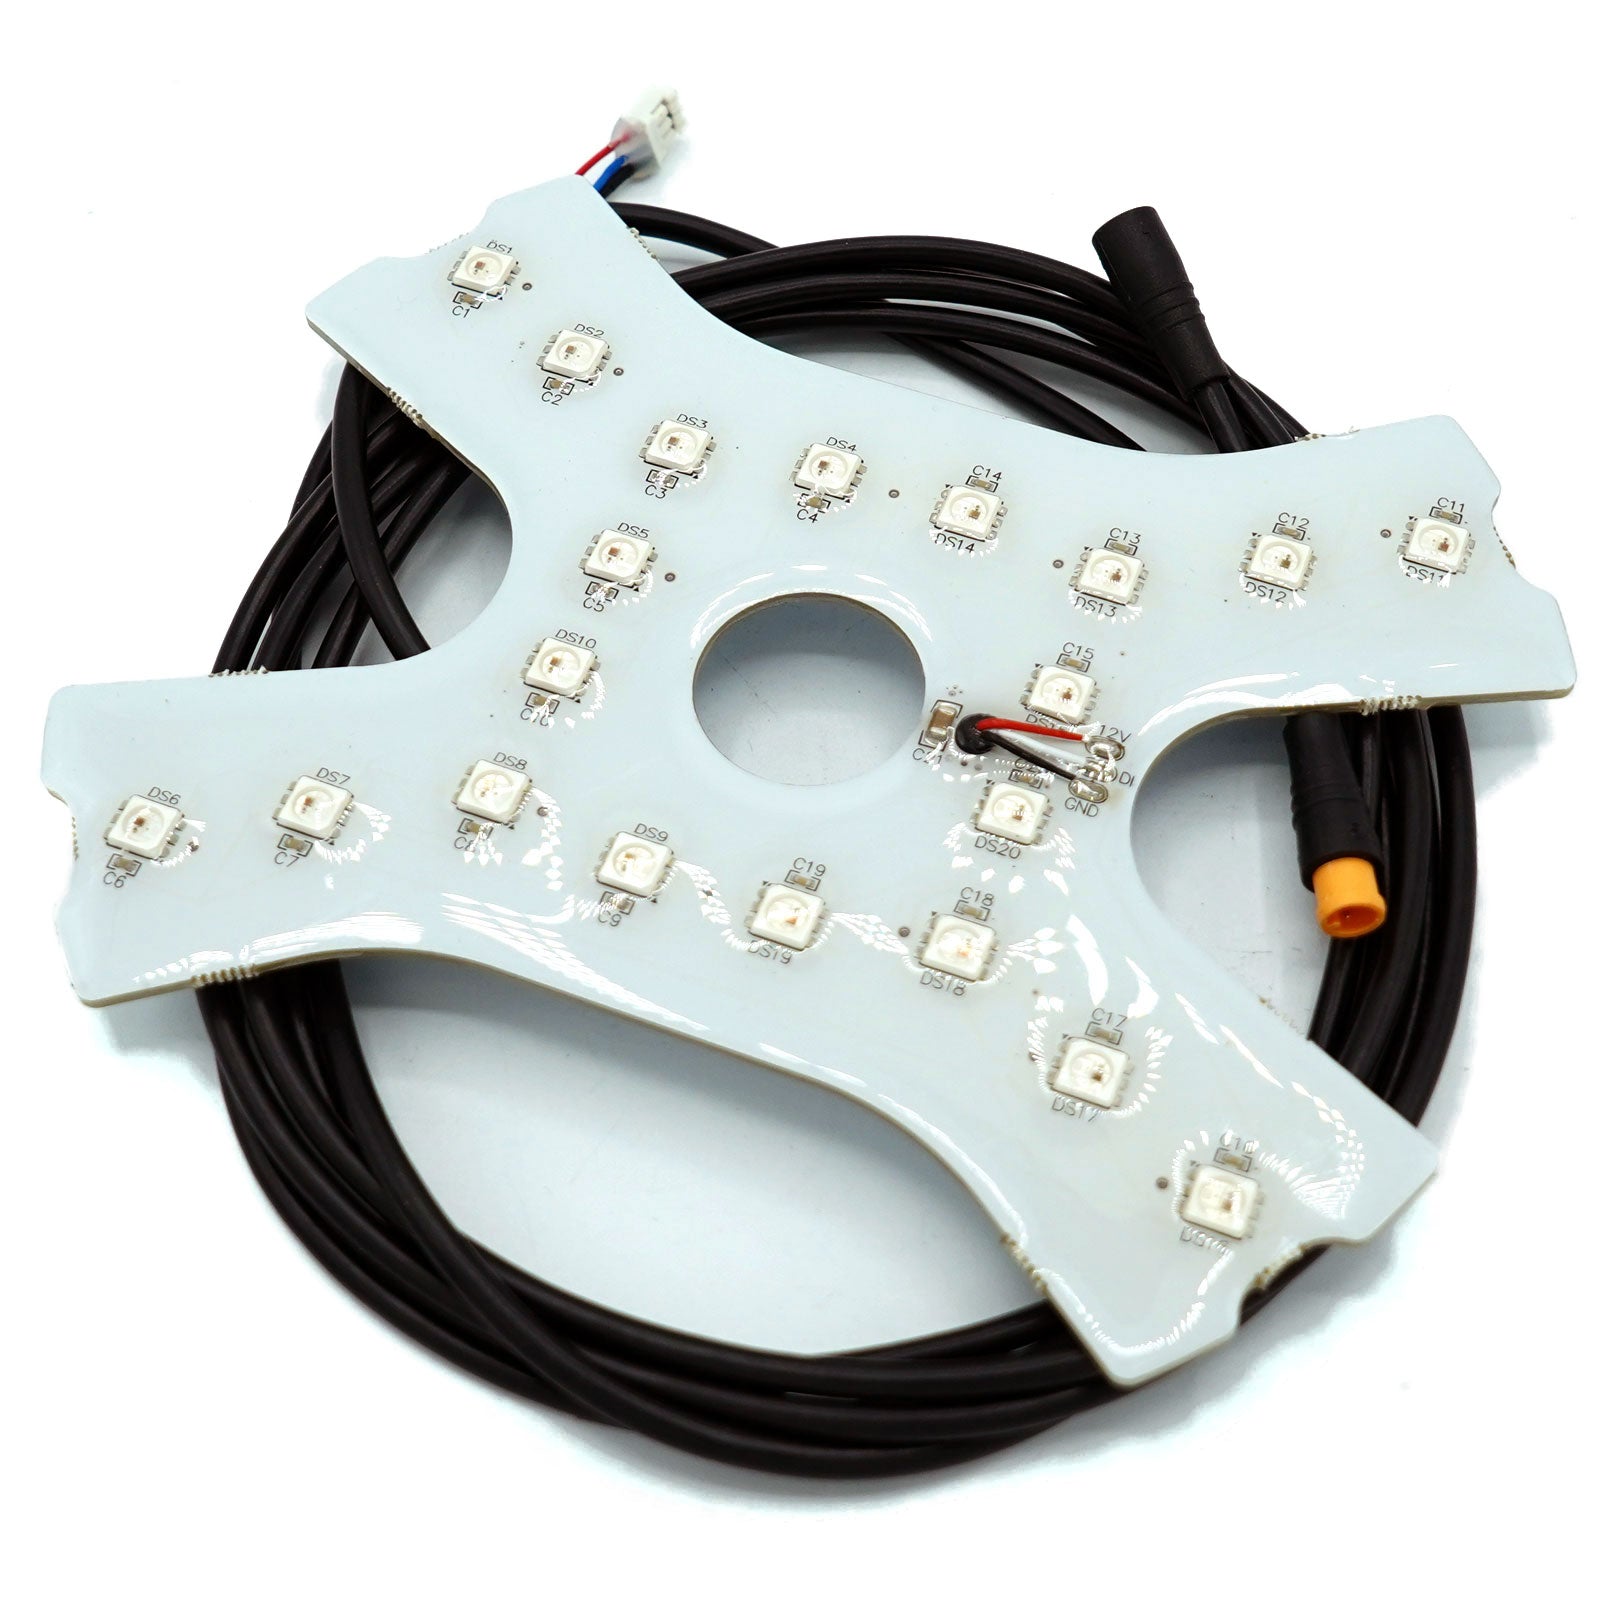 LED PCB for Dualtron X 2 (Motor)